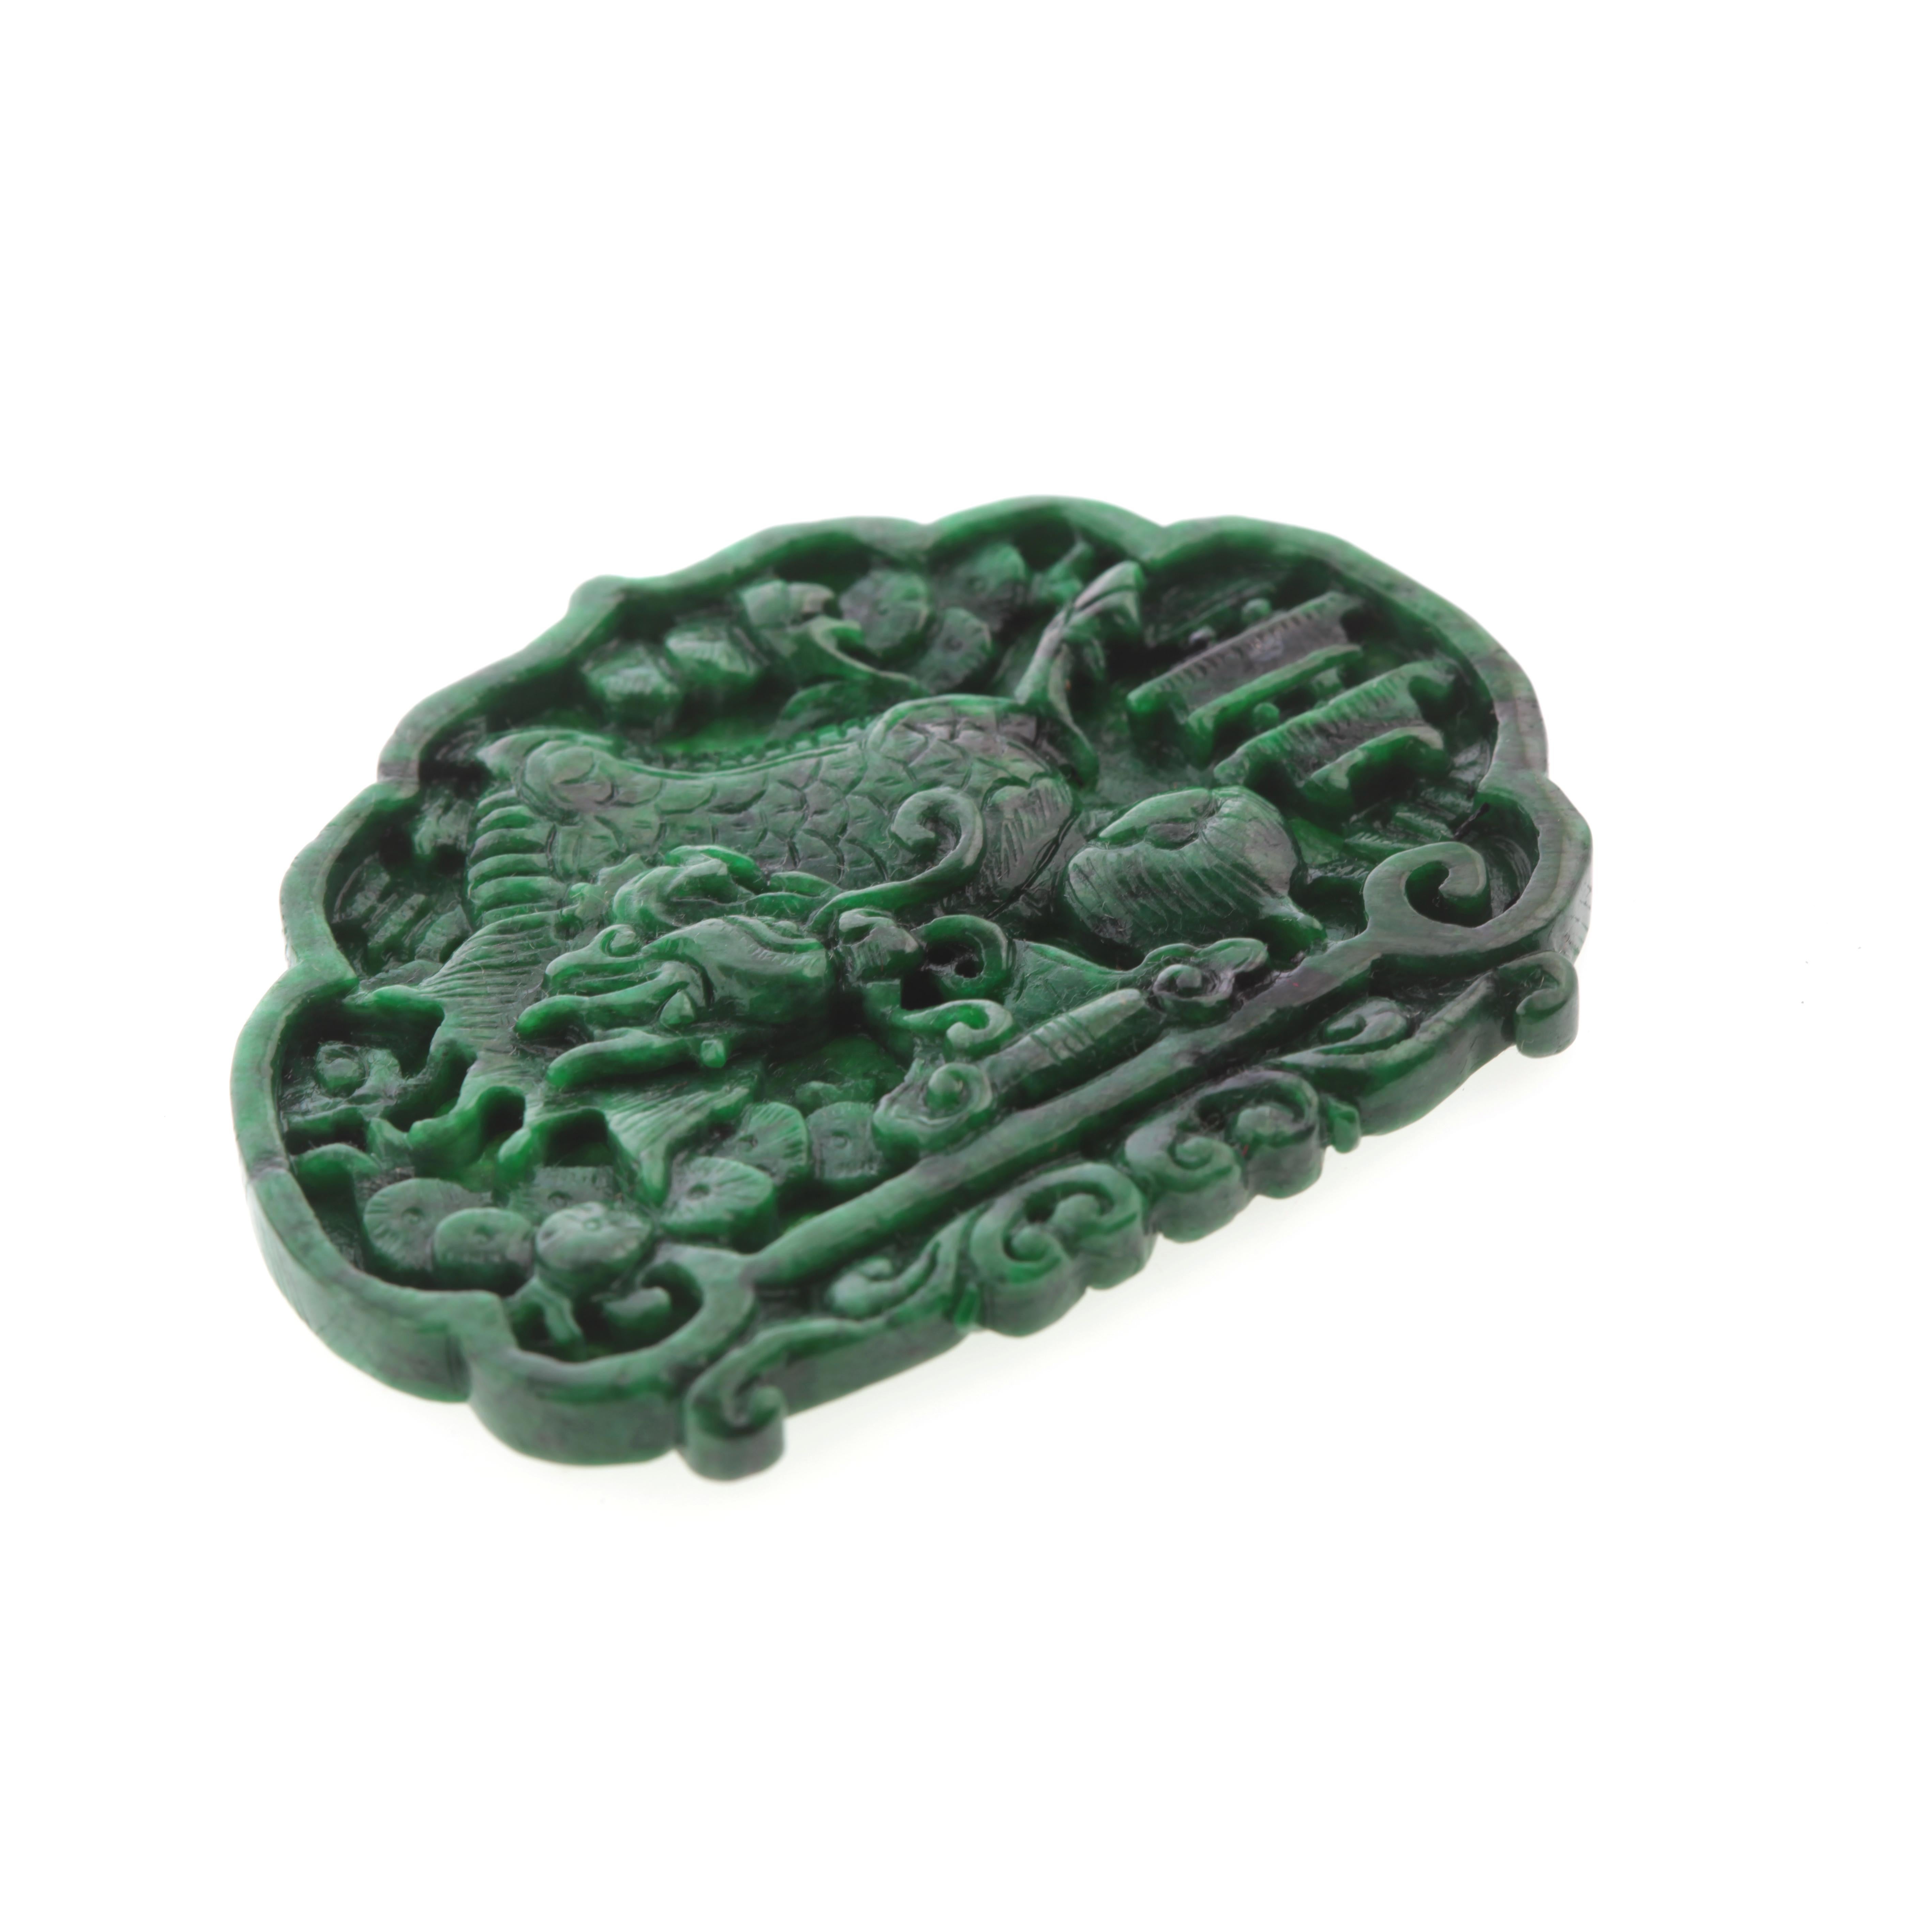 Carved Pendant Omphacite Jade Natural Jadeite Asian Art Dragon Figurine Statue 1